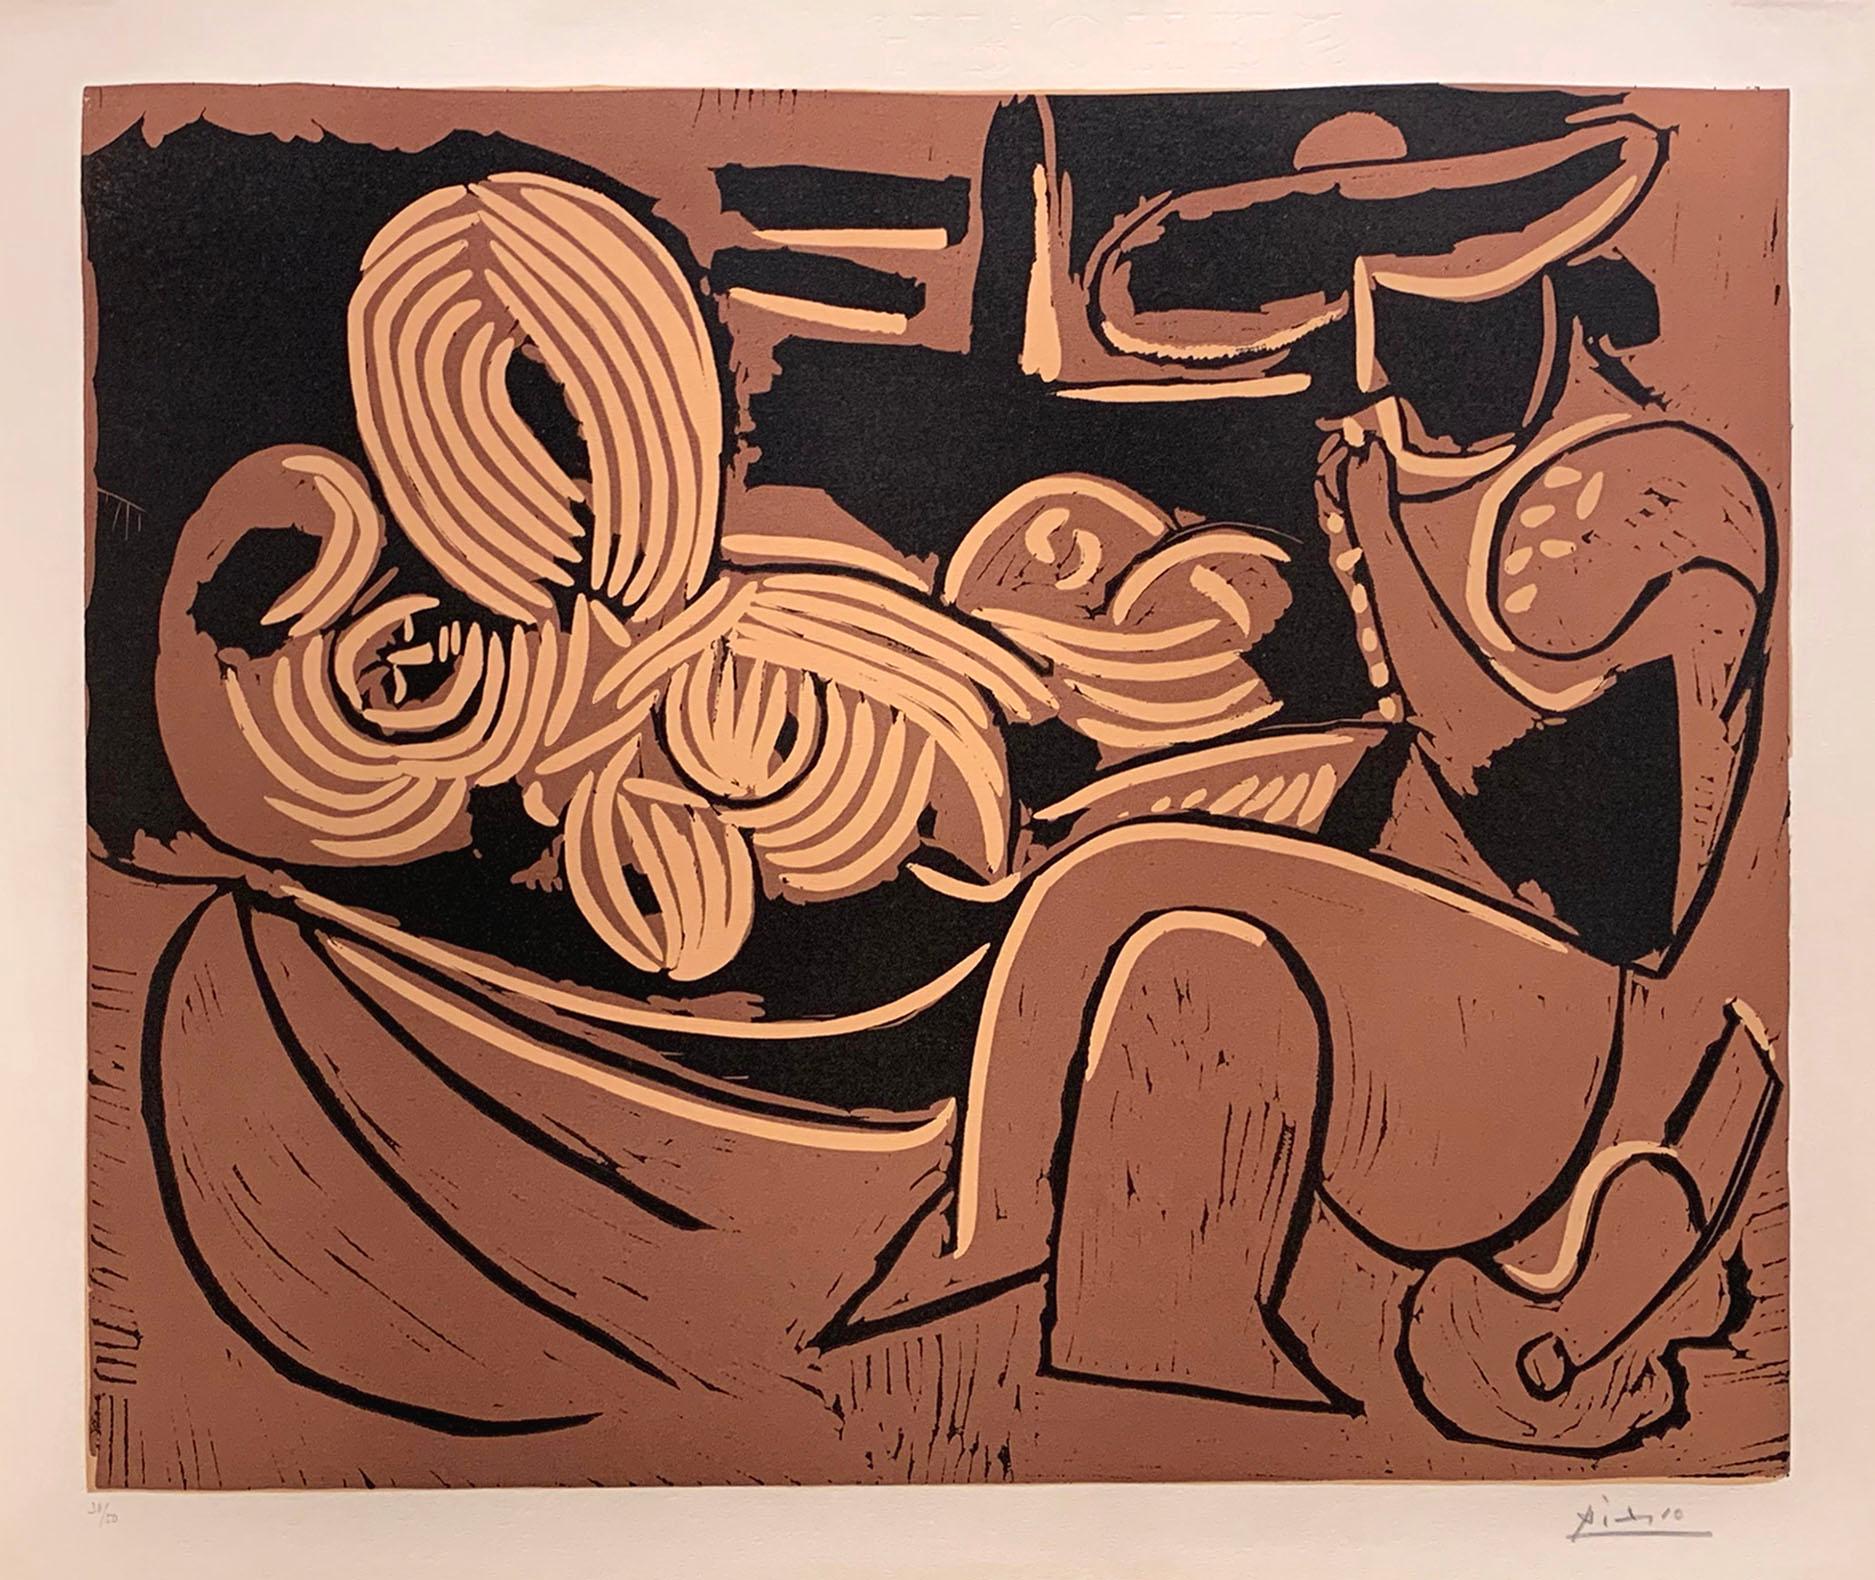 Pablo Picasso Figurative Print - Femme couchée et homme à la guitare (Woman Lying Down and Man with a Guitar)